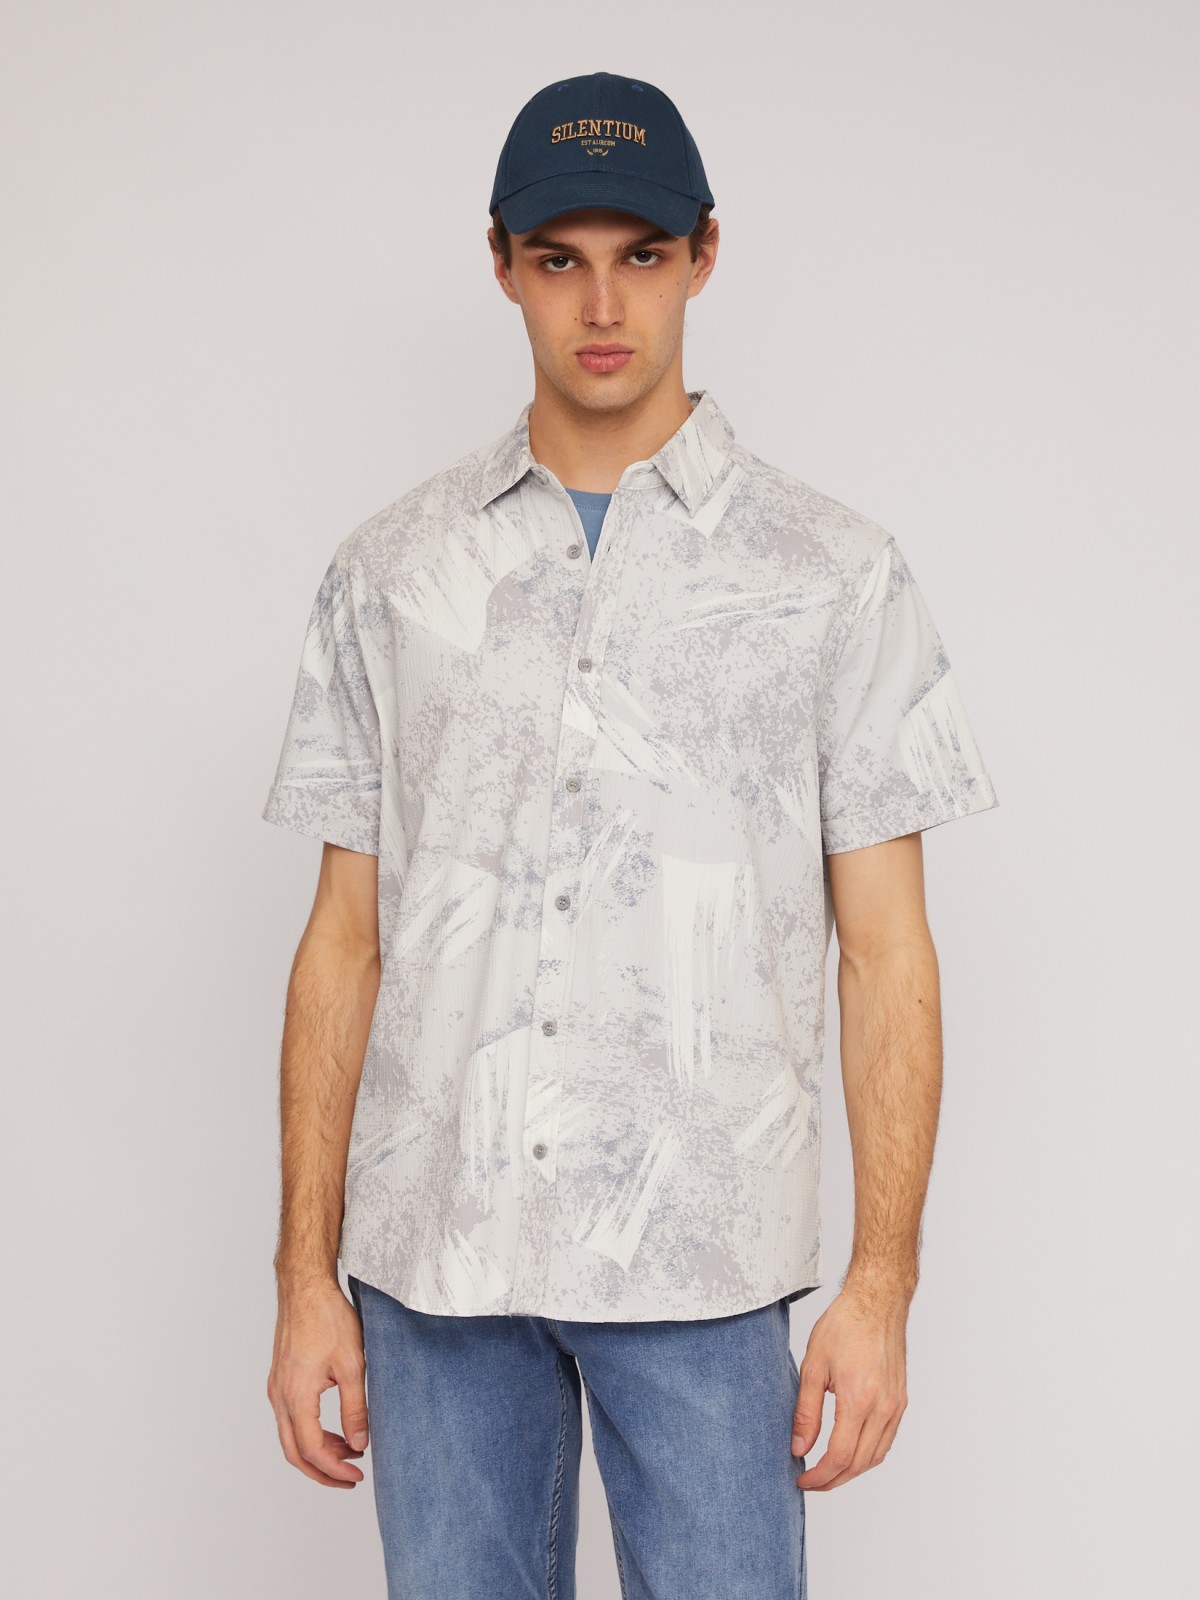 Рубашка из хлопка с принтом и с коротким рукавом zolla 014232291091, цвет светло-серый, размер M - фото 3